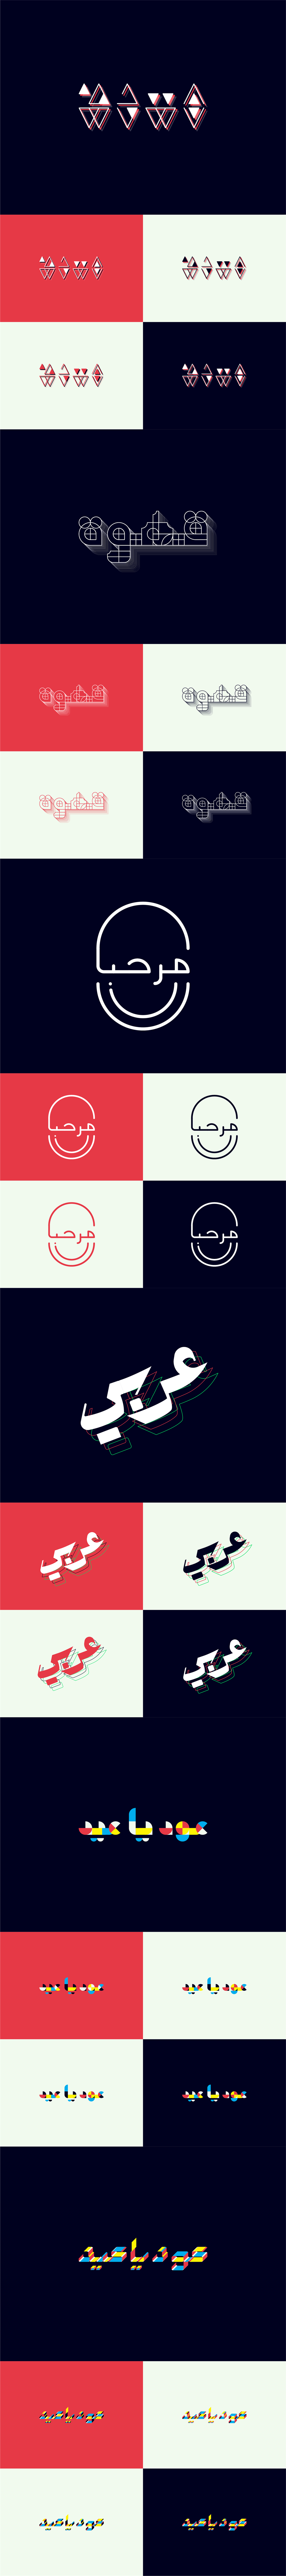 arabic arabic typography Calligraphy   lettering type typo typography   vector designer Eid